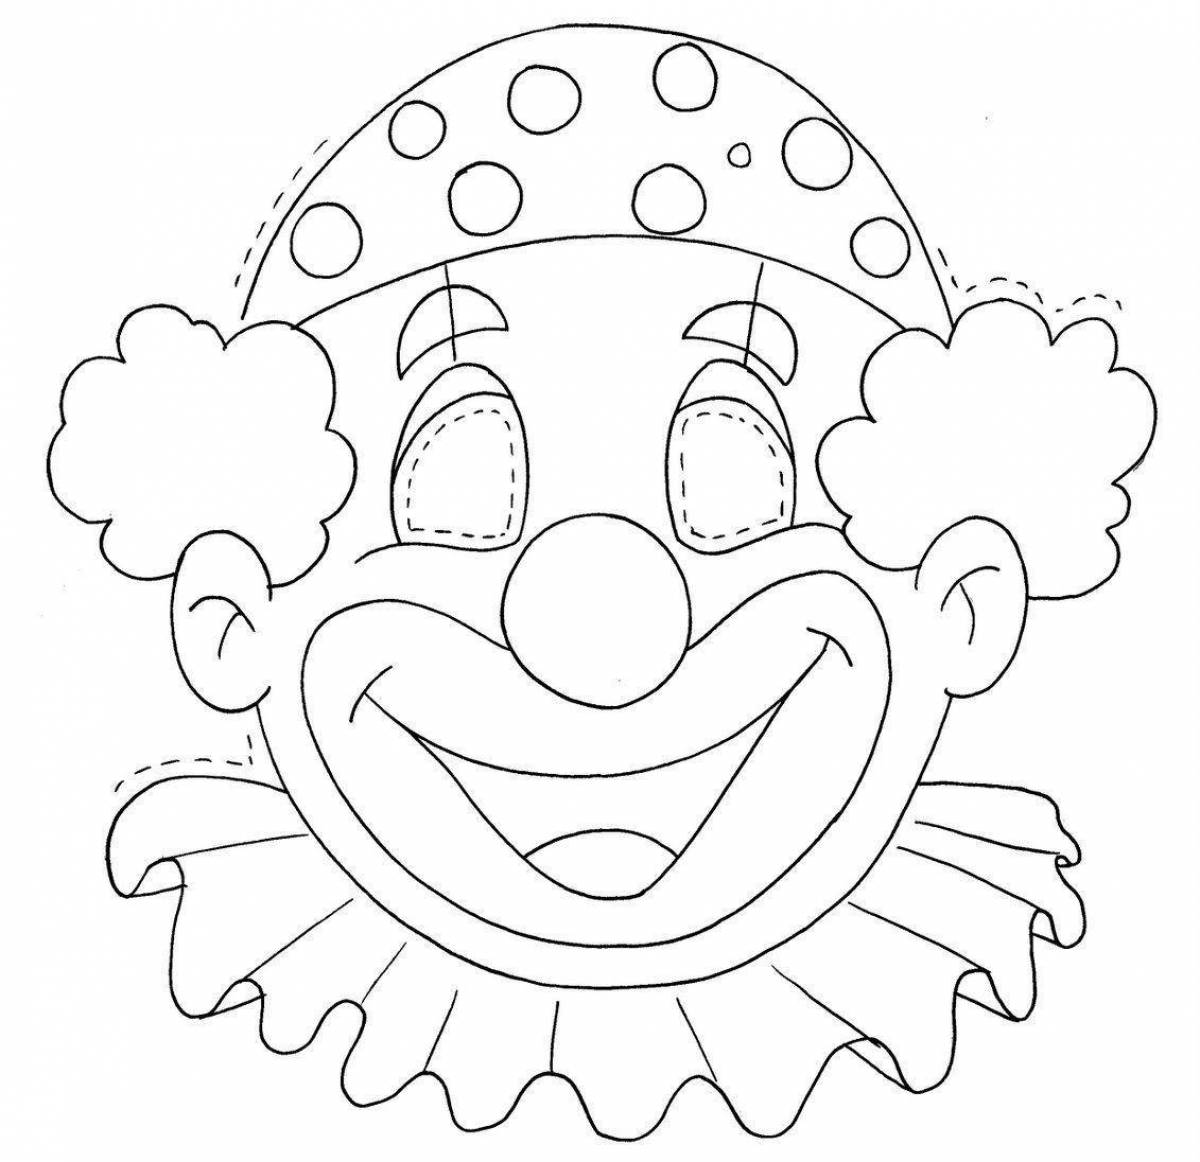 Fun clown head coloring page